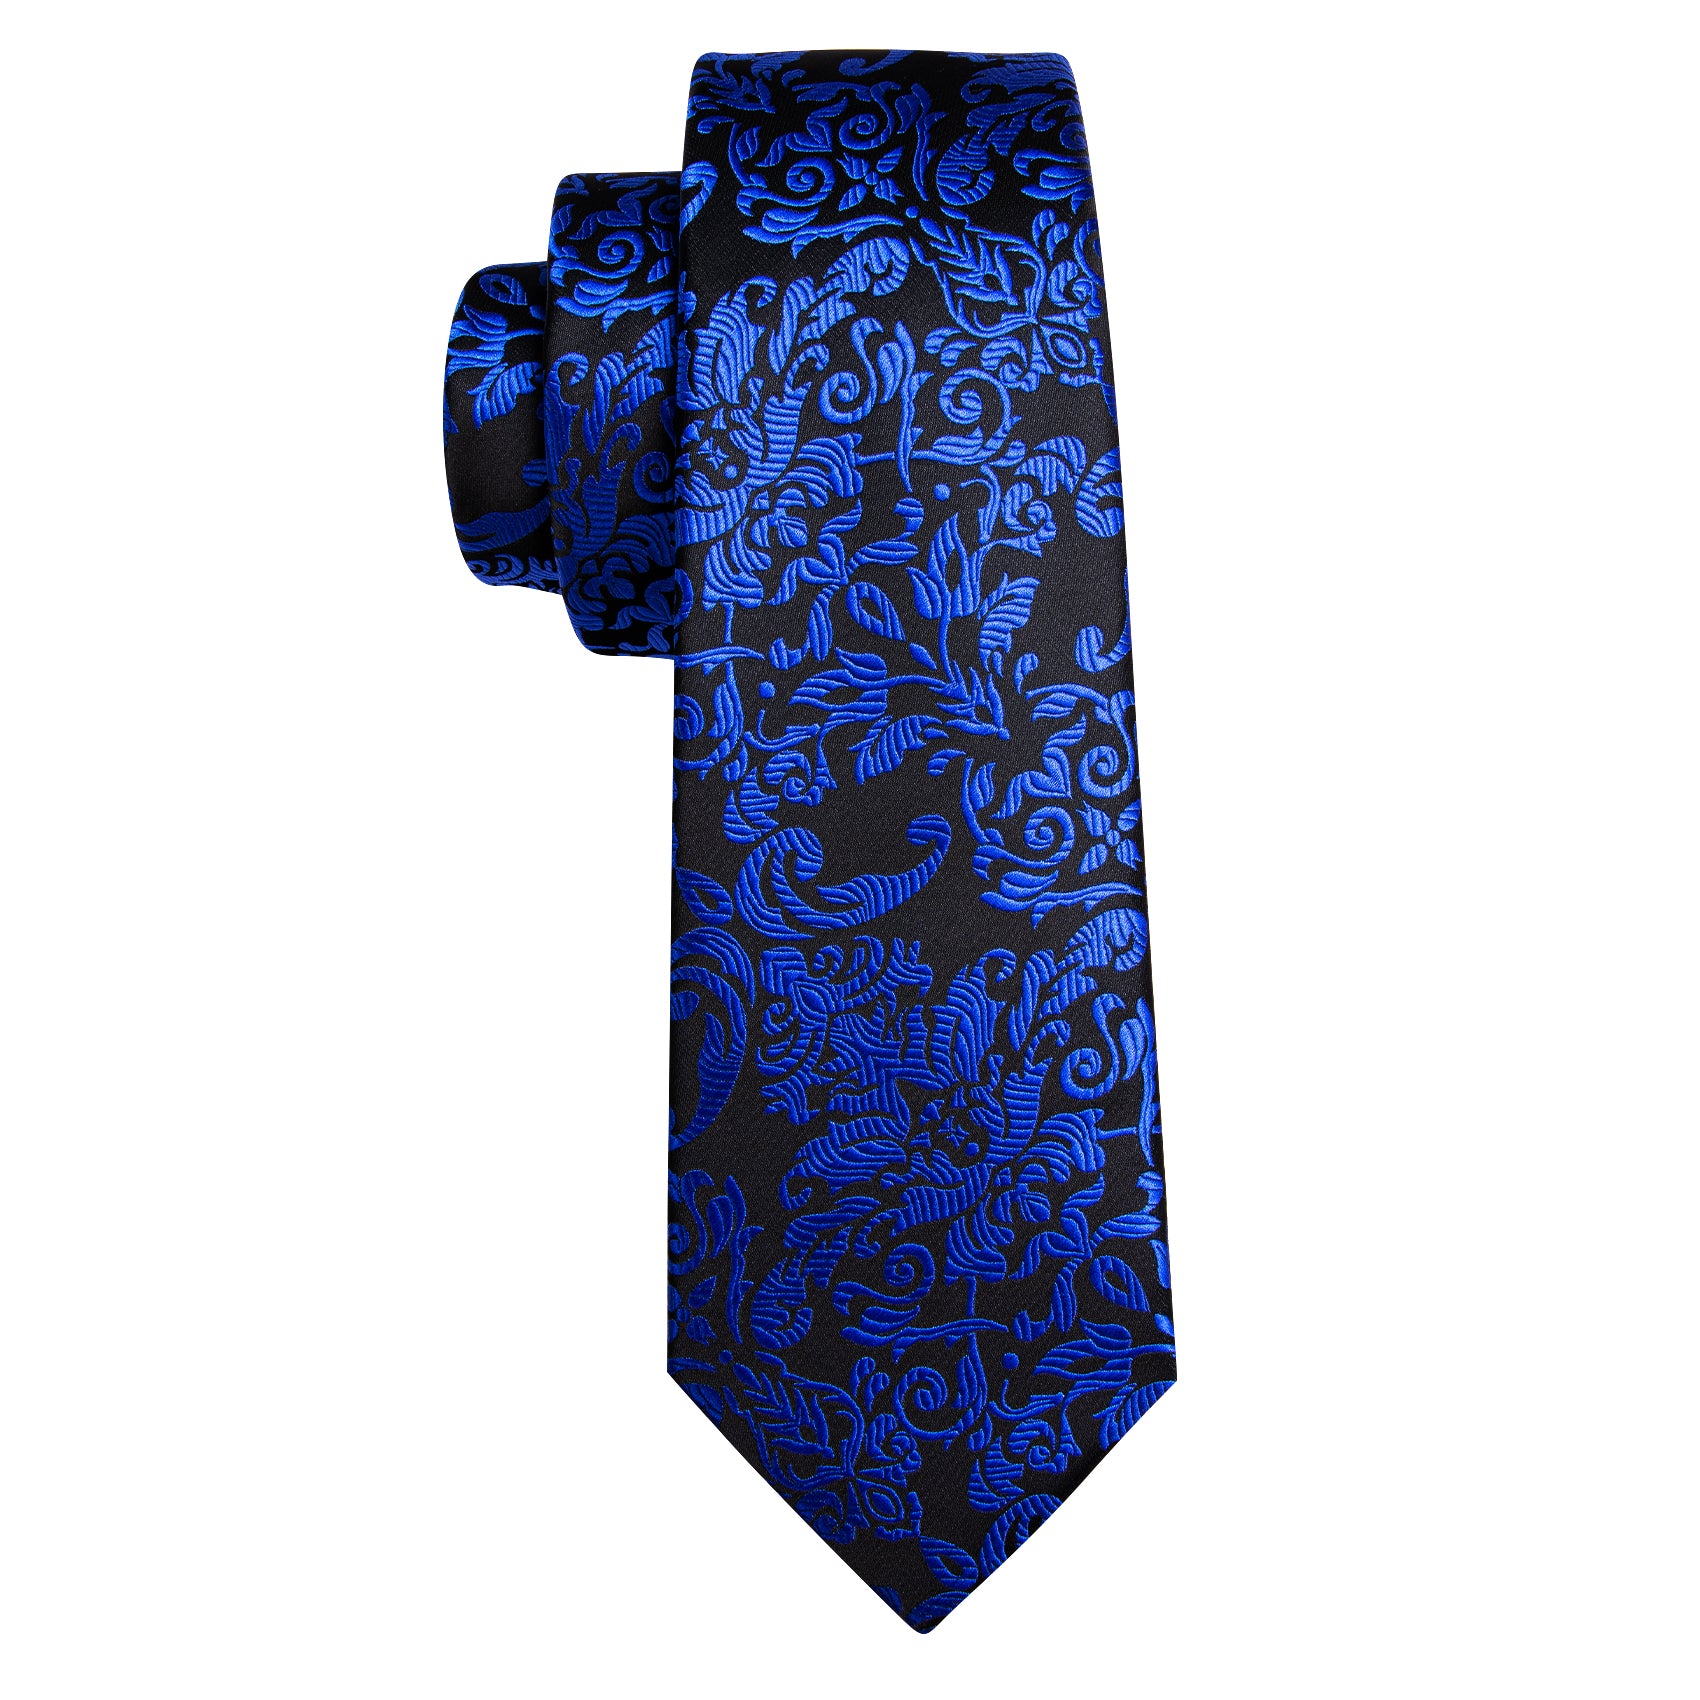 Barry.wang Black Tie Cobalt Blue Floral Silk Tie Pocket Square Cufflinks Set